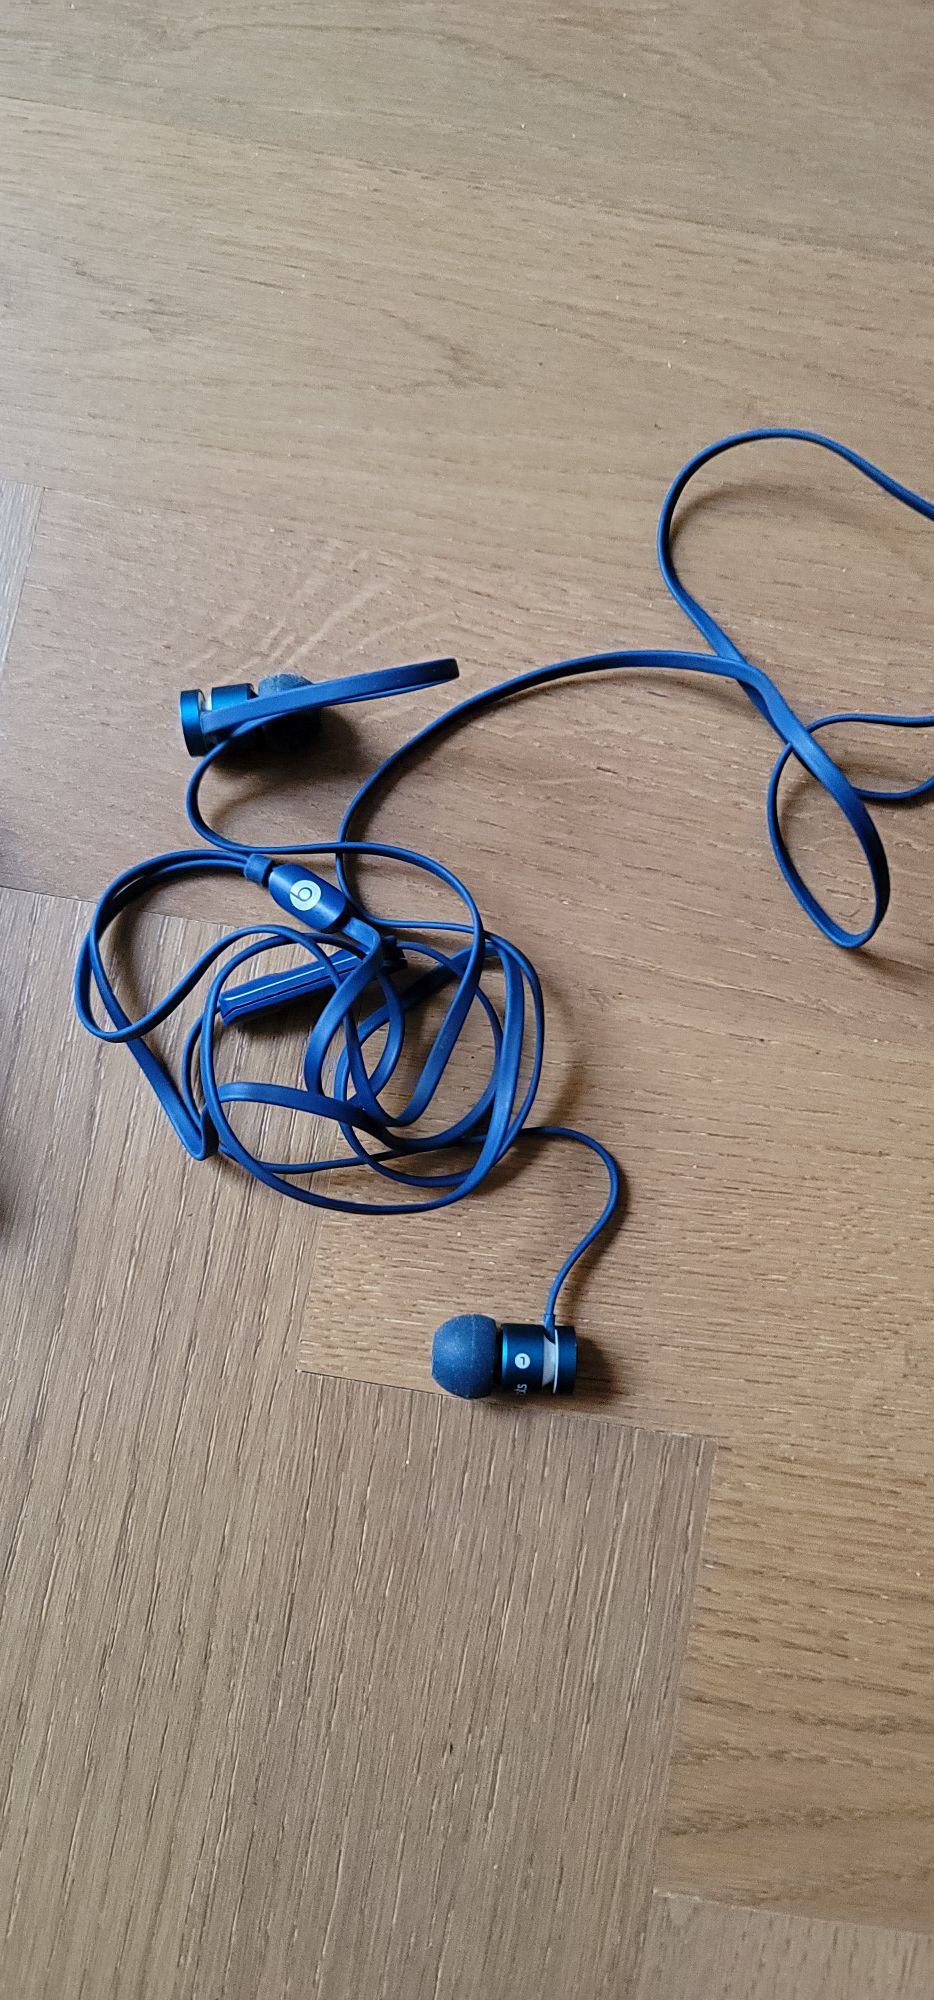 Beats wired headphones blue